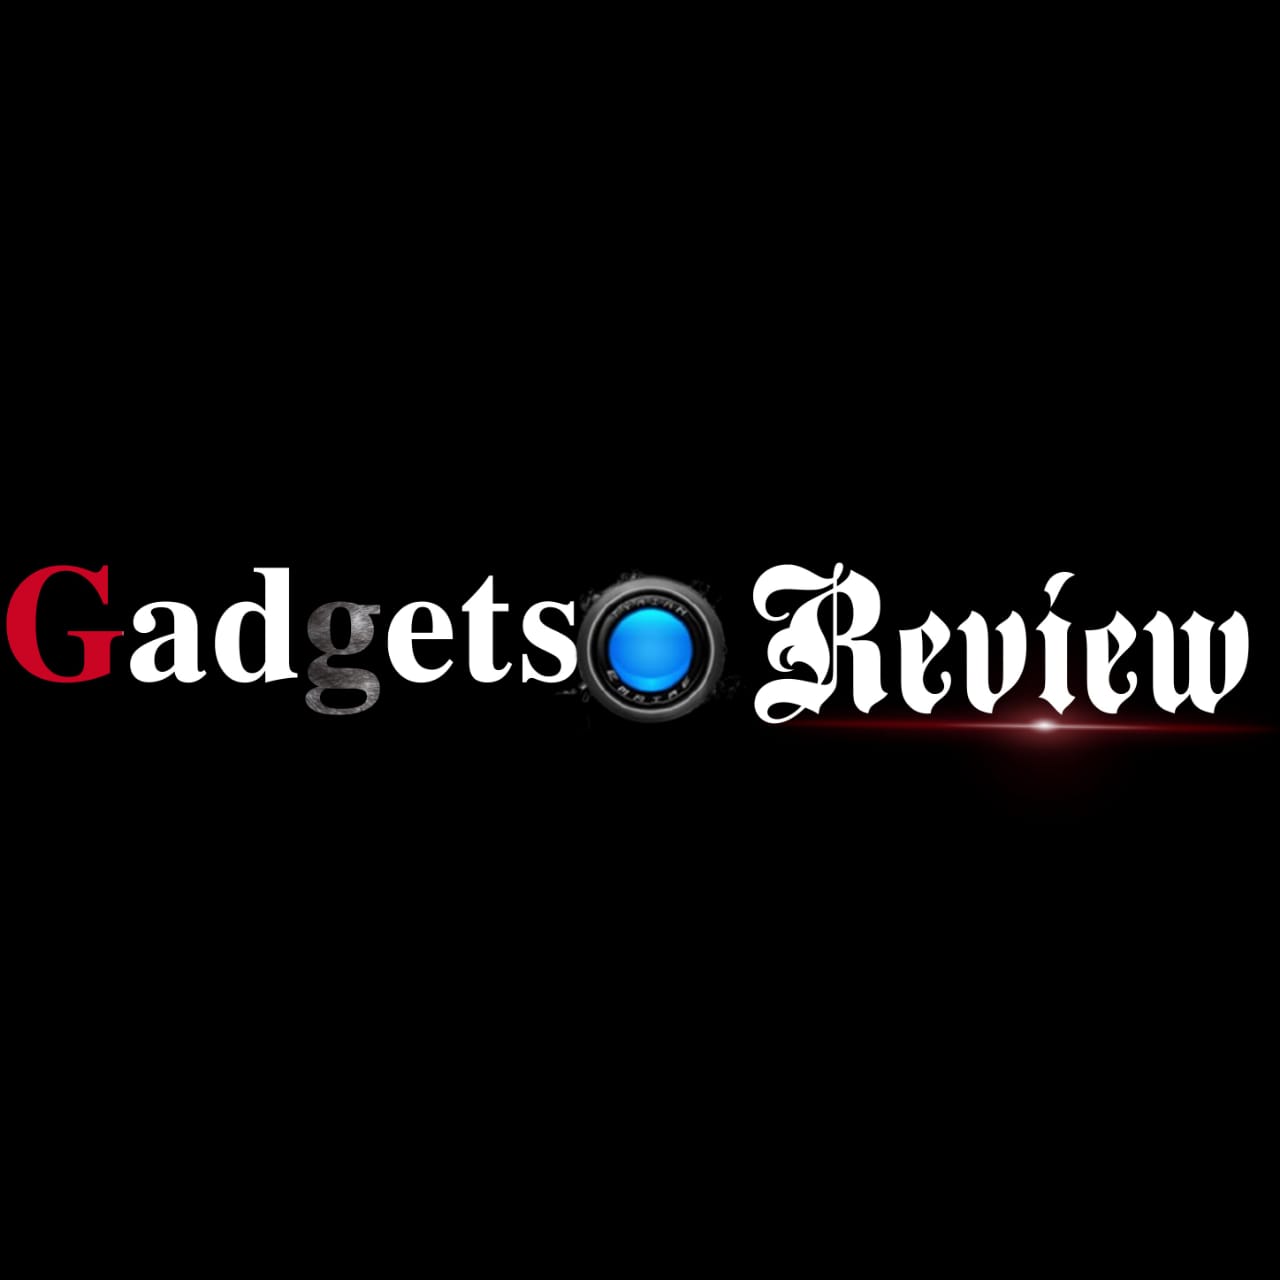 Gadgets review